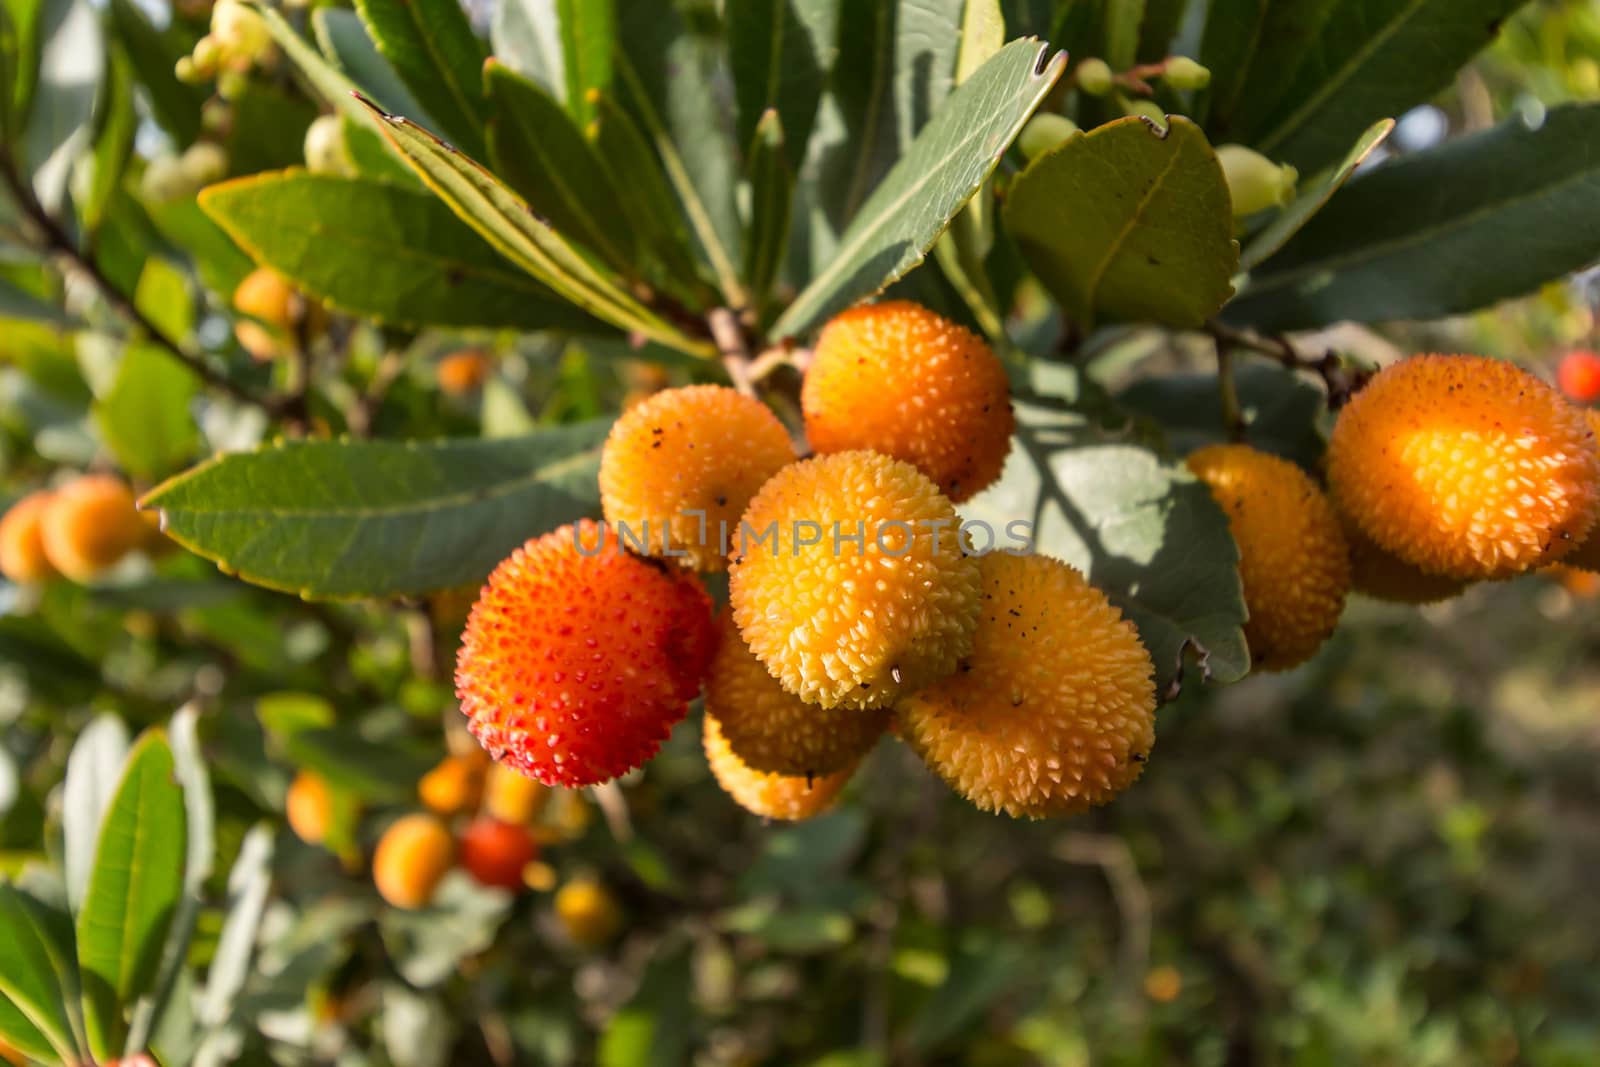 Strawberry tree o cane apple (Arbutus unedo) fruits